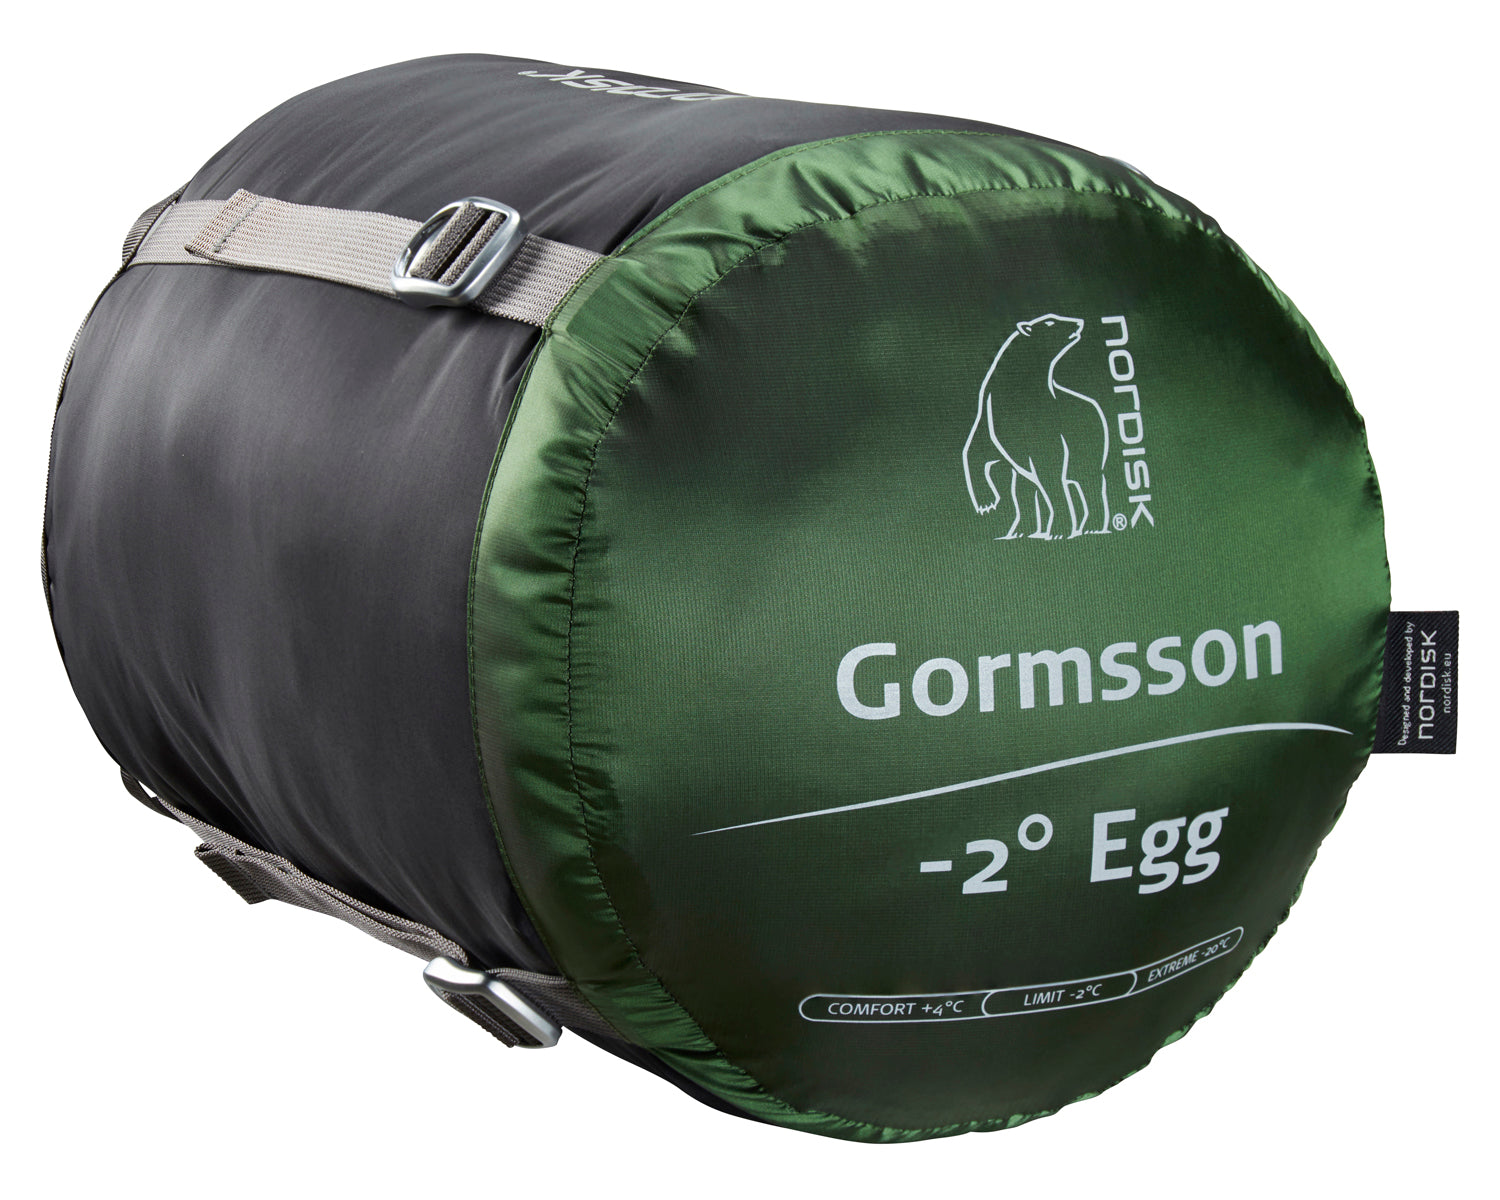 Gormsson -2° Egg sovepose - Artichoke Green/Mustard Yellow/Black